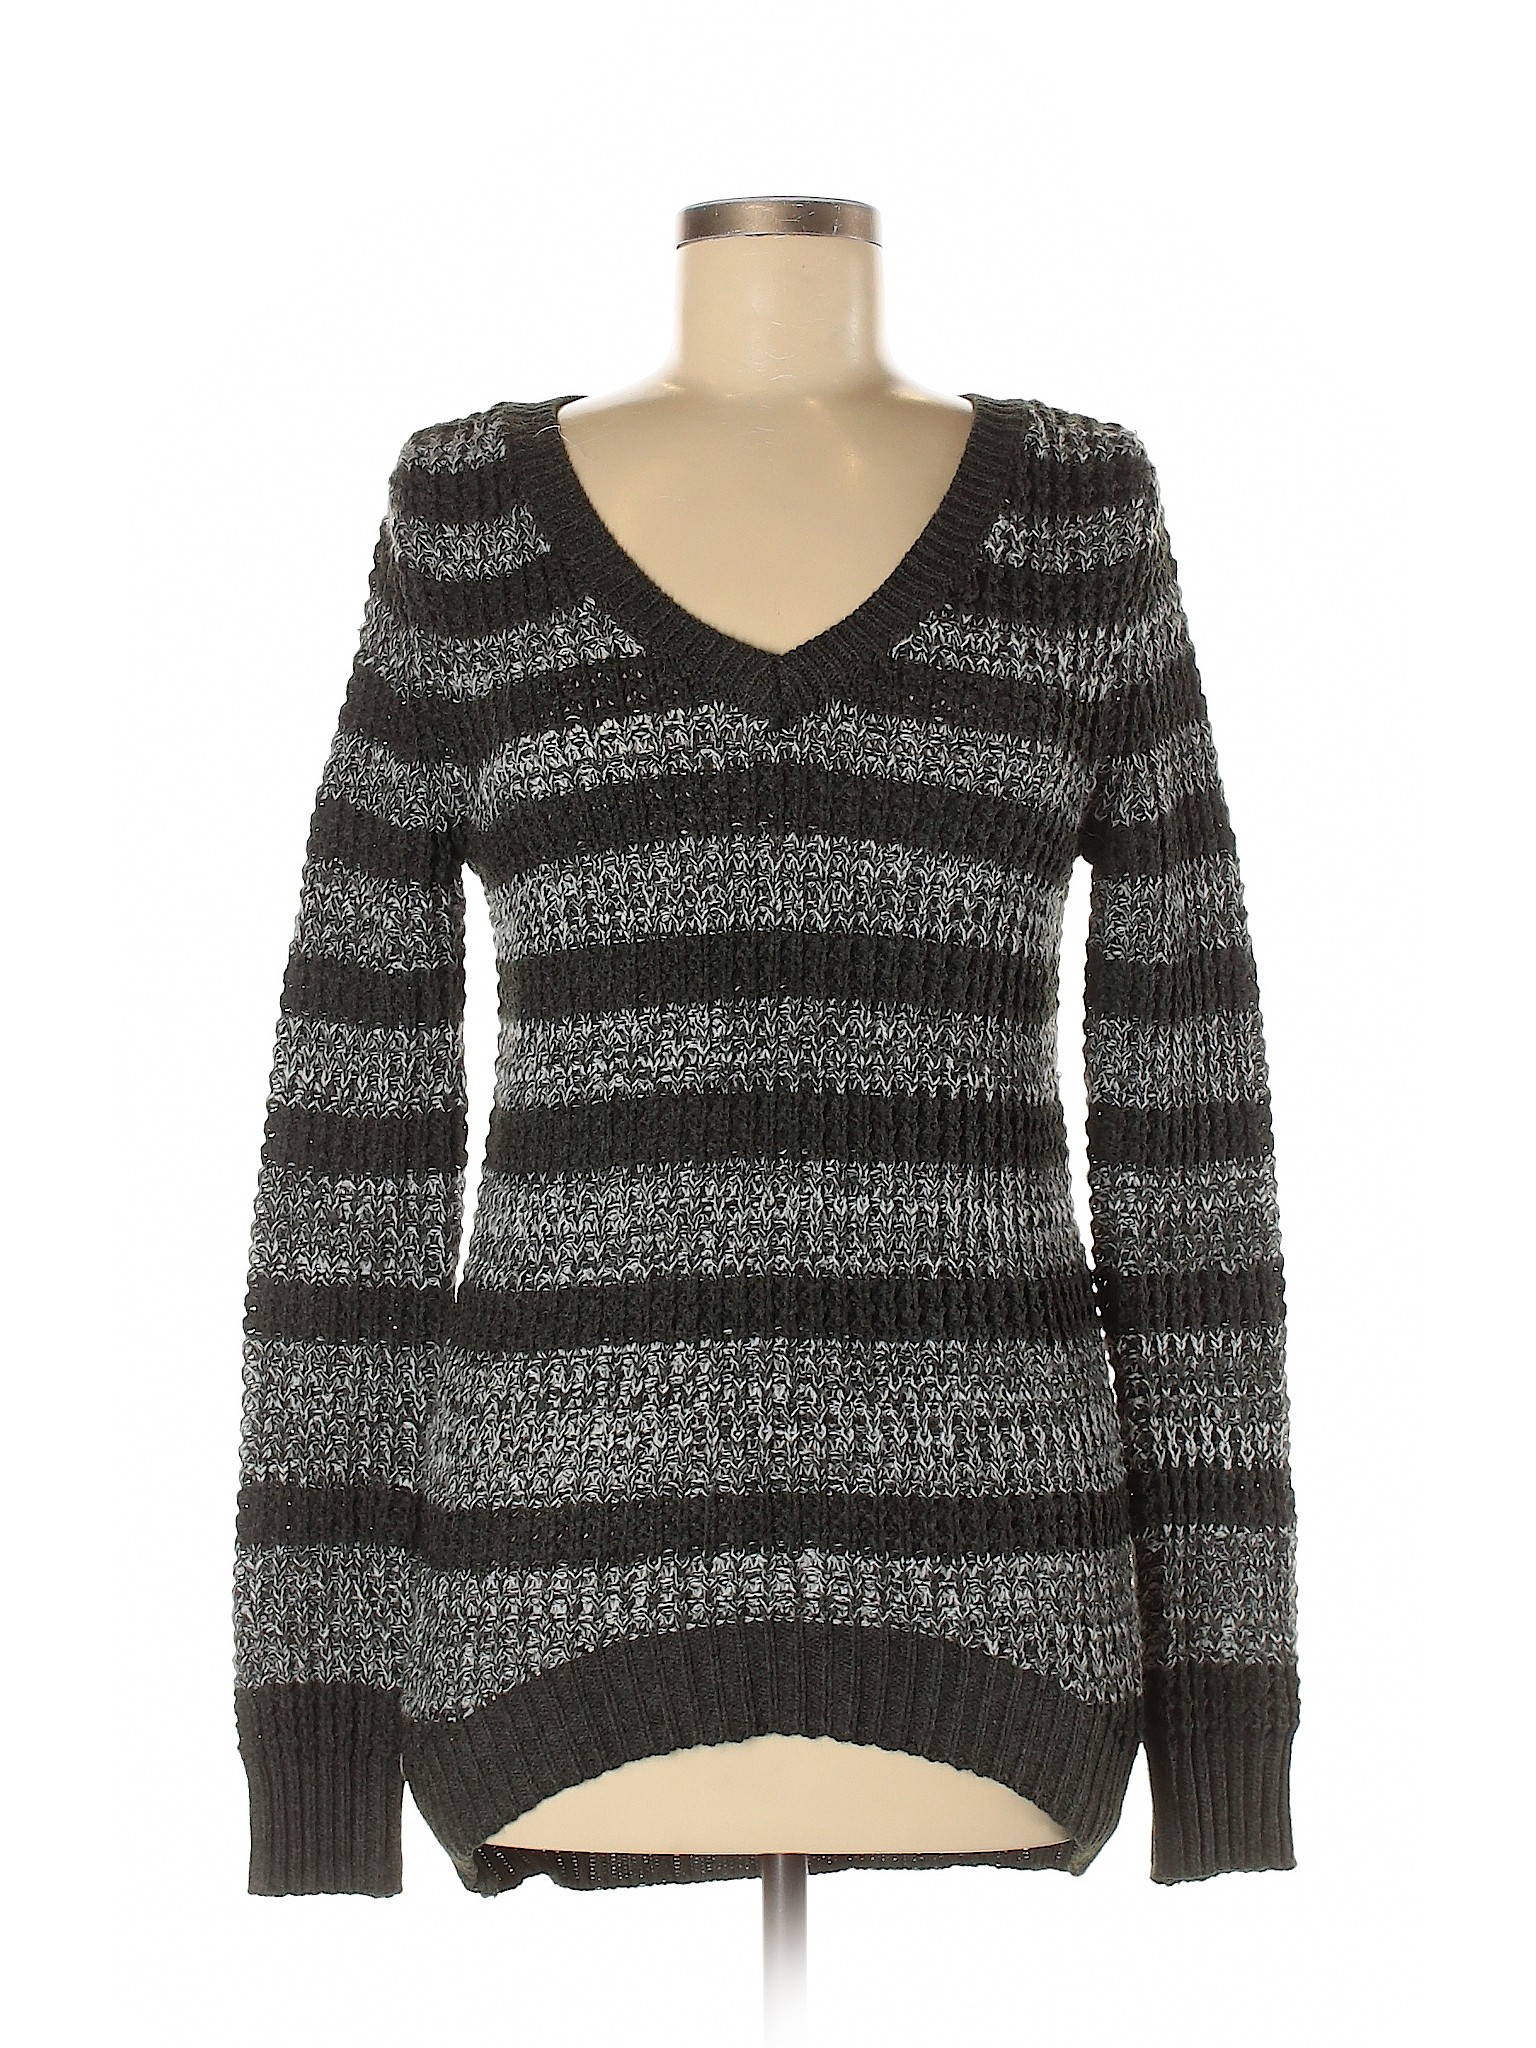 Rue21 Women Gray Pullover Sweater M | eBay